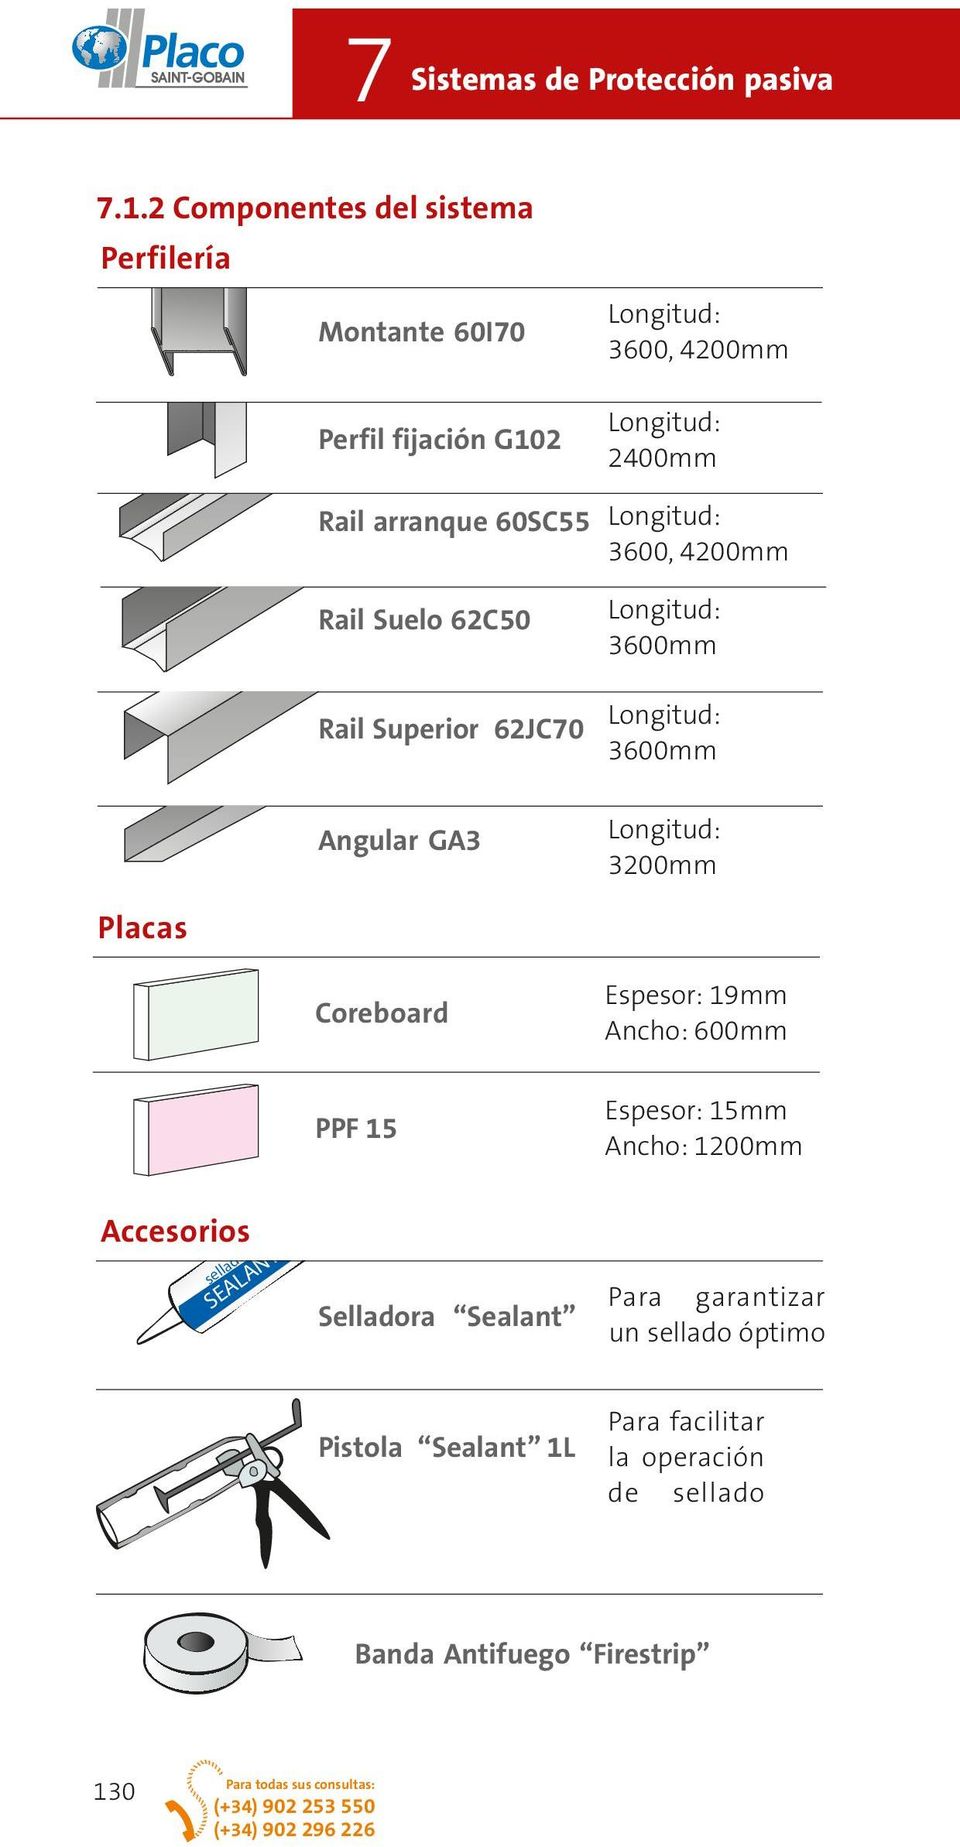 4200mm Rail Suelo 62C50 Rail Superior 62JC70 Angular GA3 Longitud: 3600mm Longitud: 3600mm Longitud: 3200mm Placas Coreboard Espesor: 19mm Ancho: